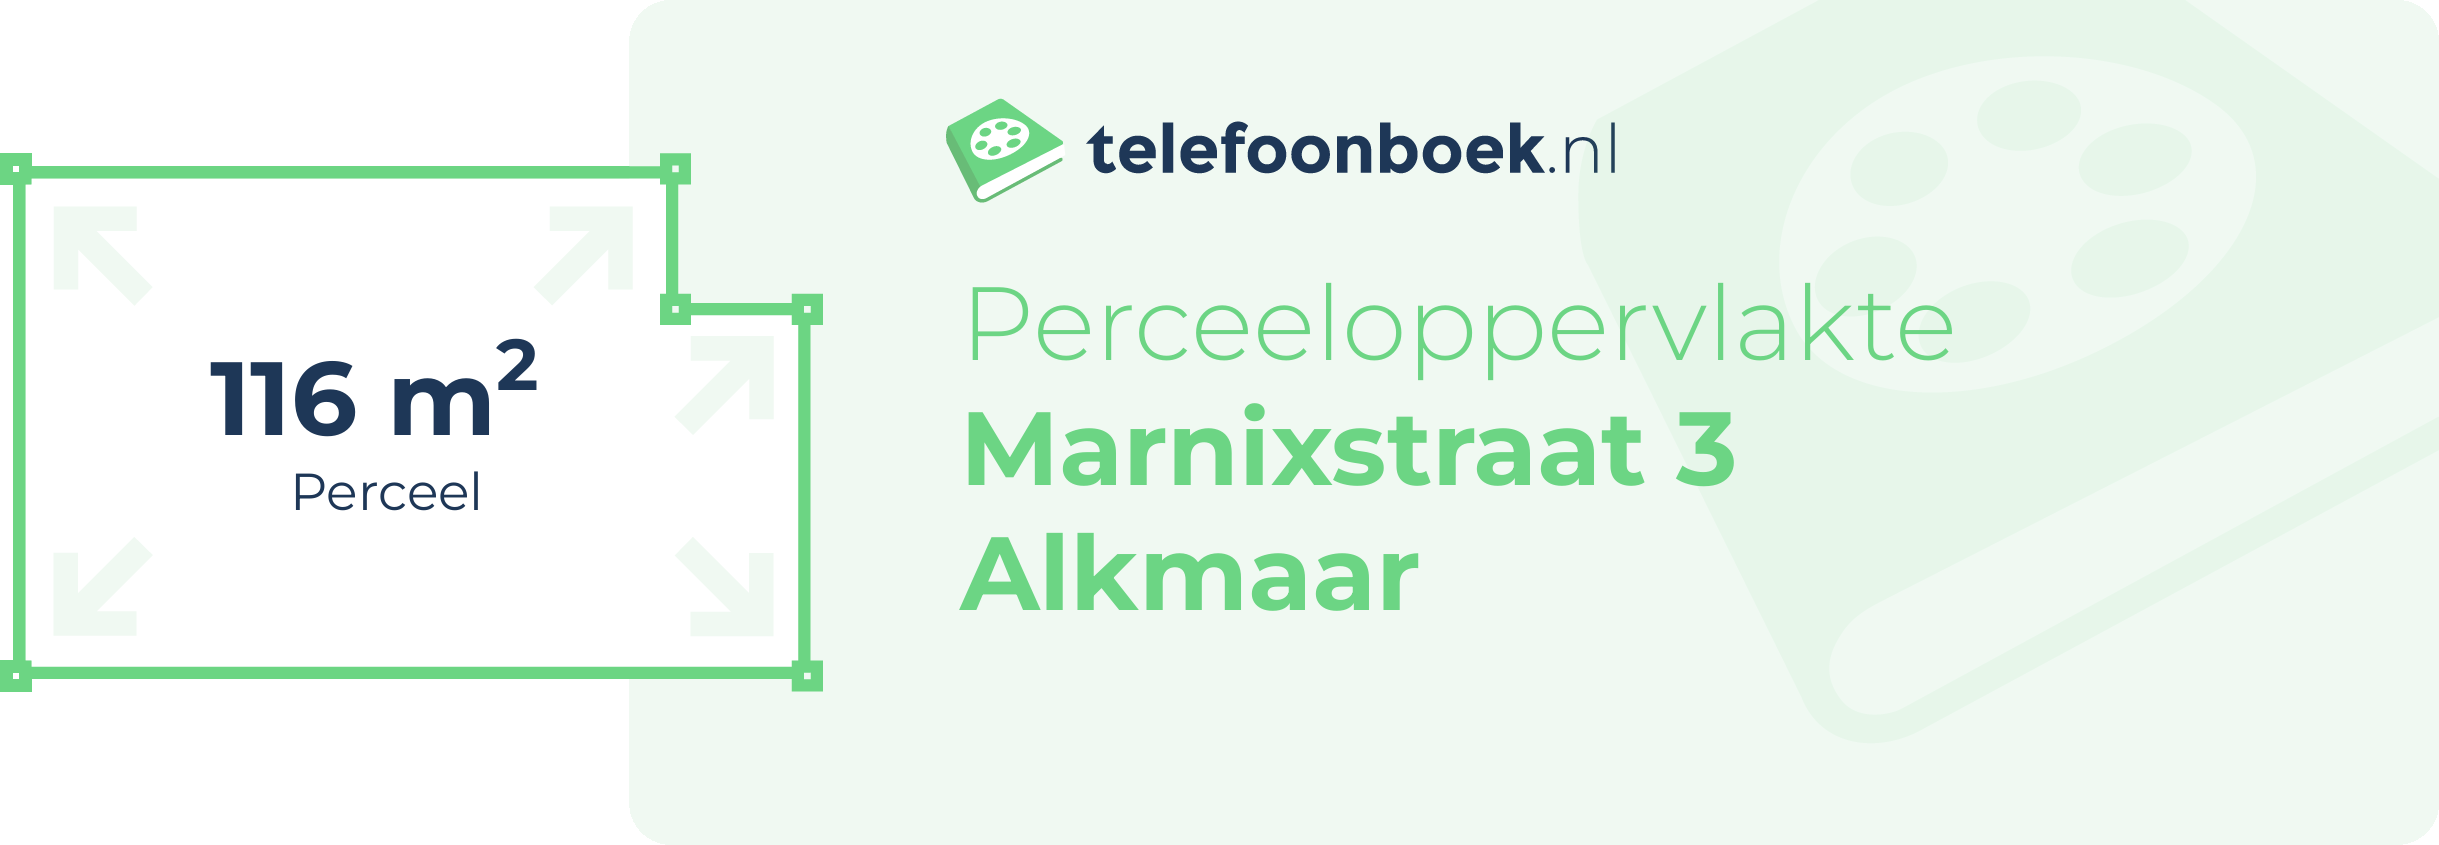 Perceeloppervlakte Marnixstraat 3 Alkmaar